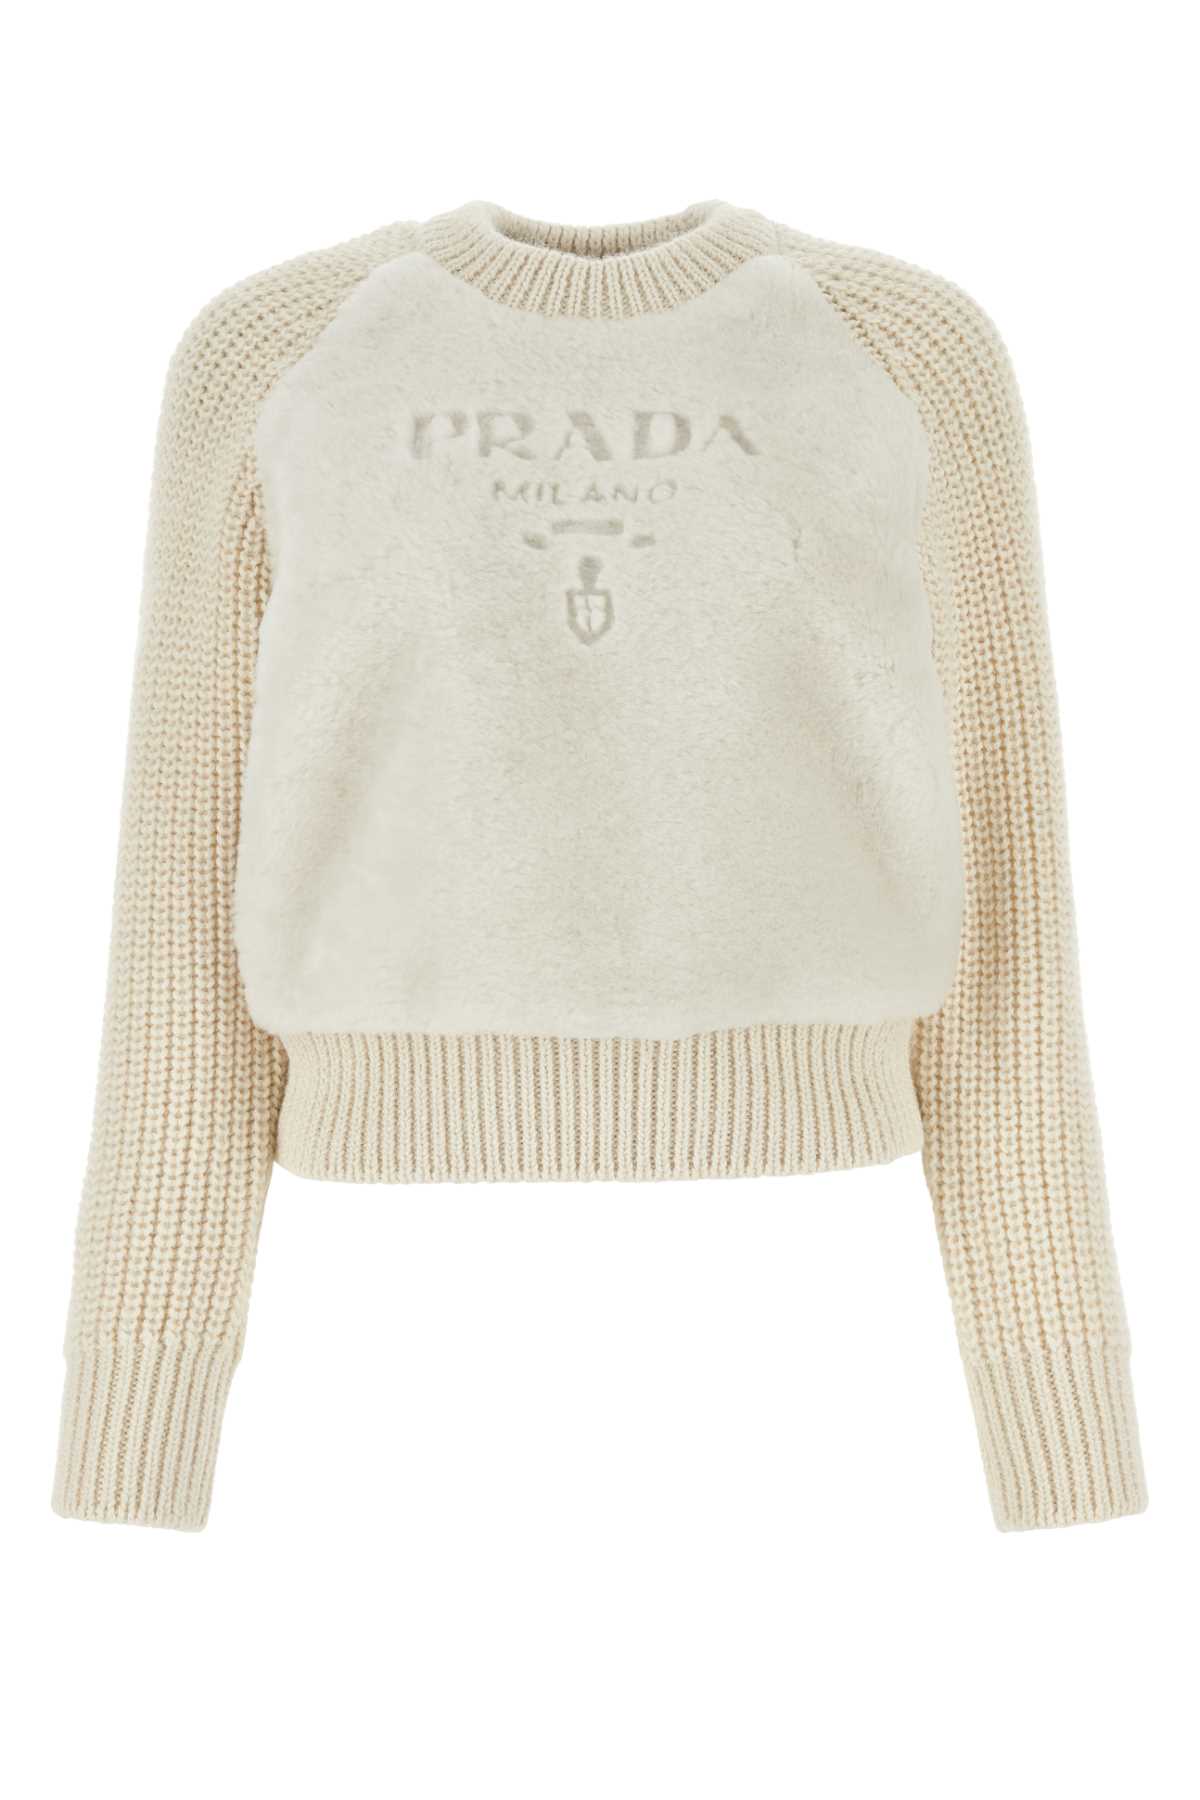 Prada Ivory Shearling And Alpaca Sweater